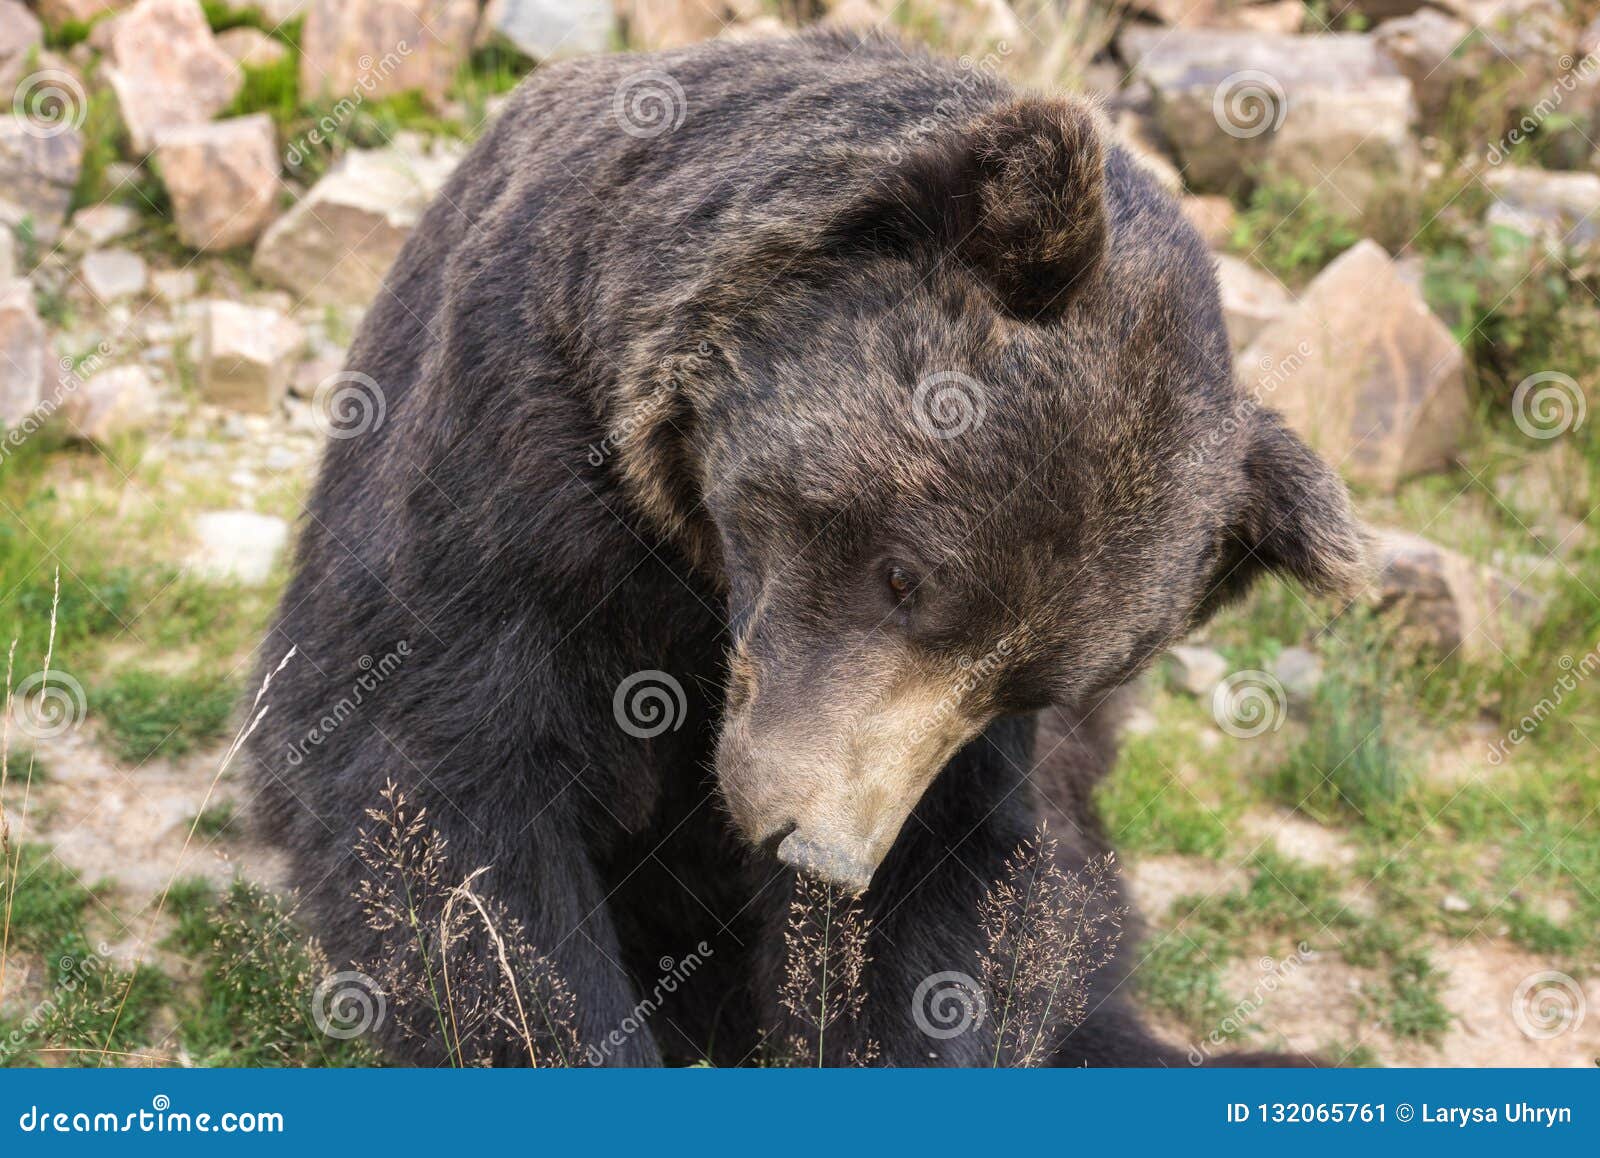 big european brown bear ursidae, ursus arctos with expressive sad eyes on the forest background